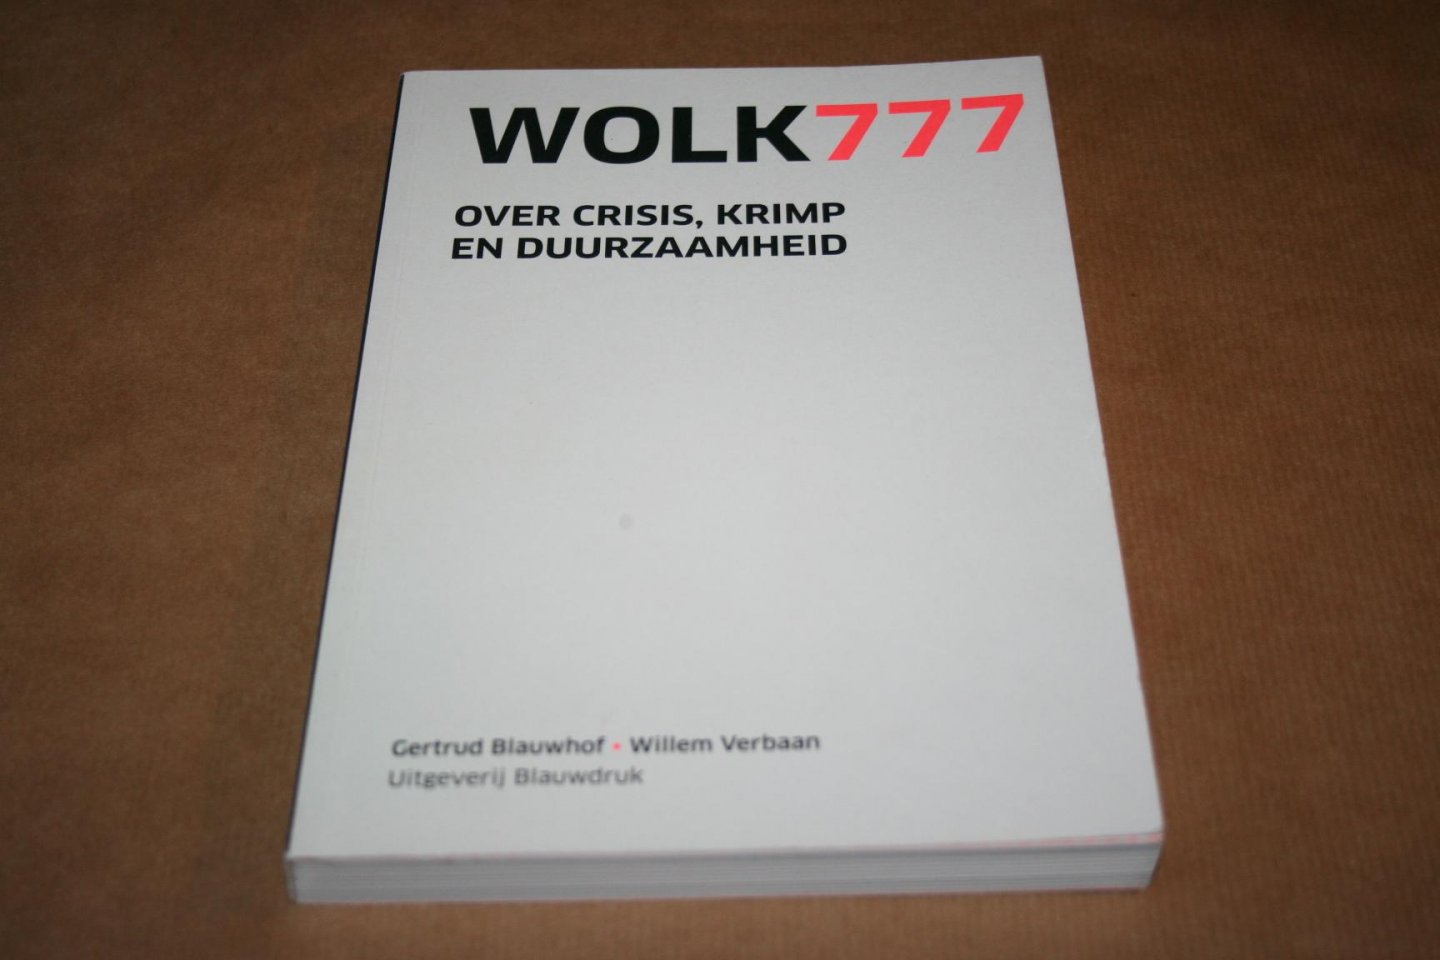 Blauwhof & Verbaan - Wolk777 -- Over crisis, krimp en duurzaamheid